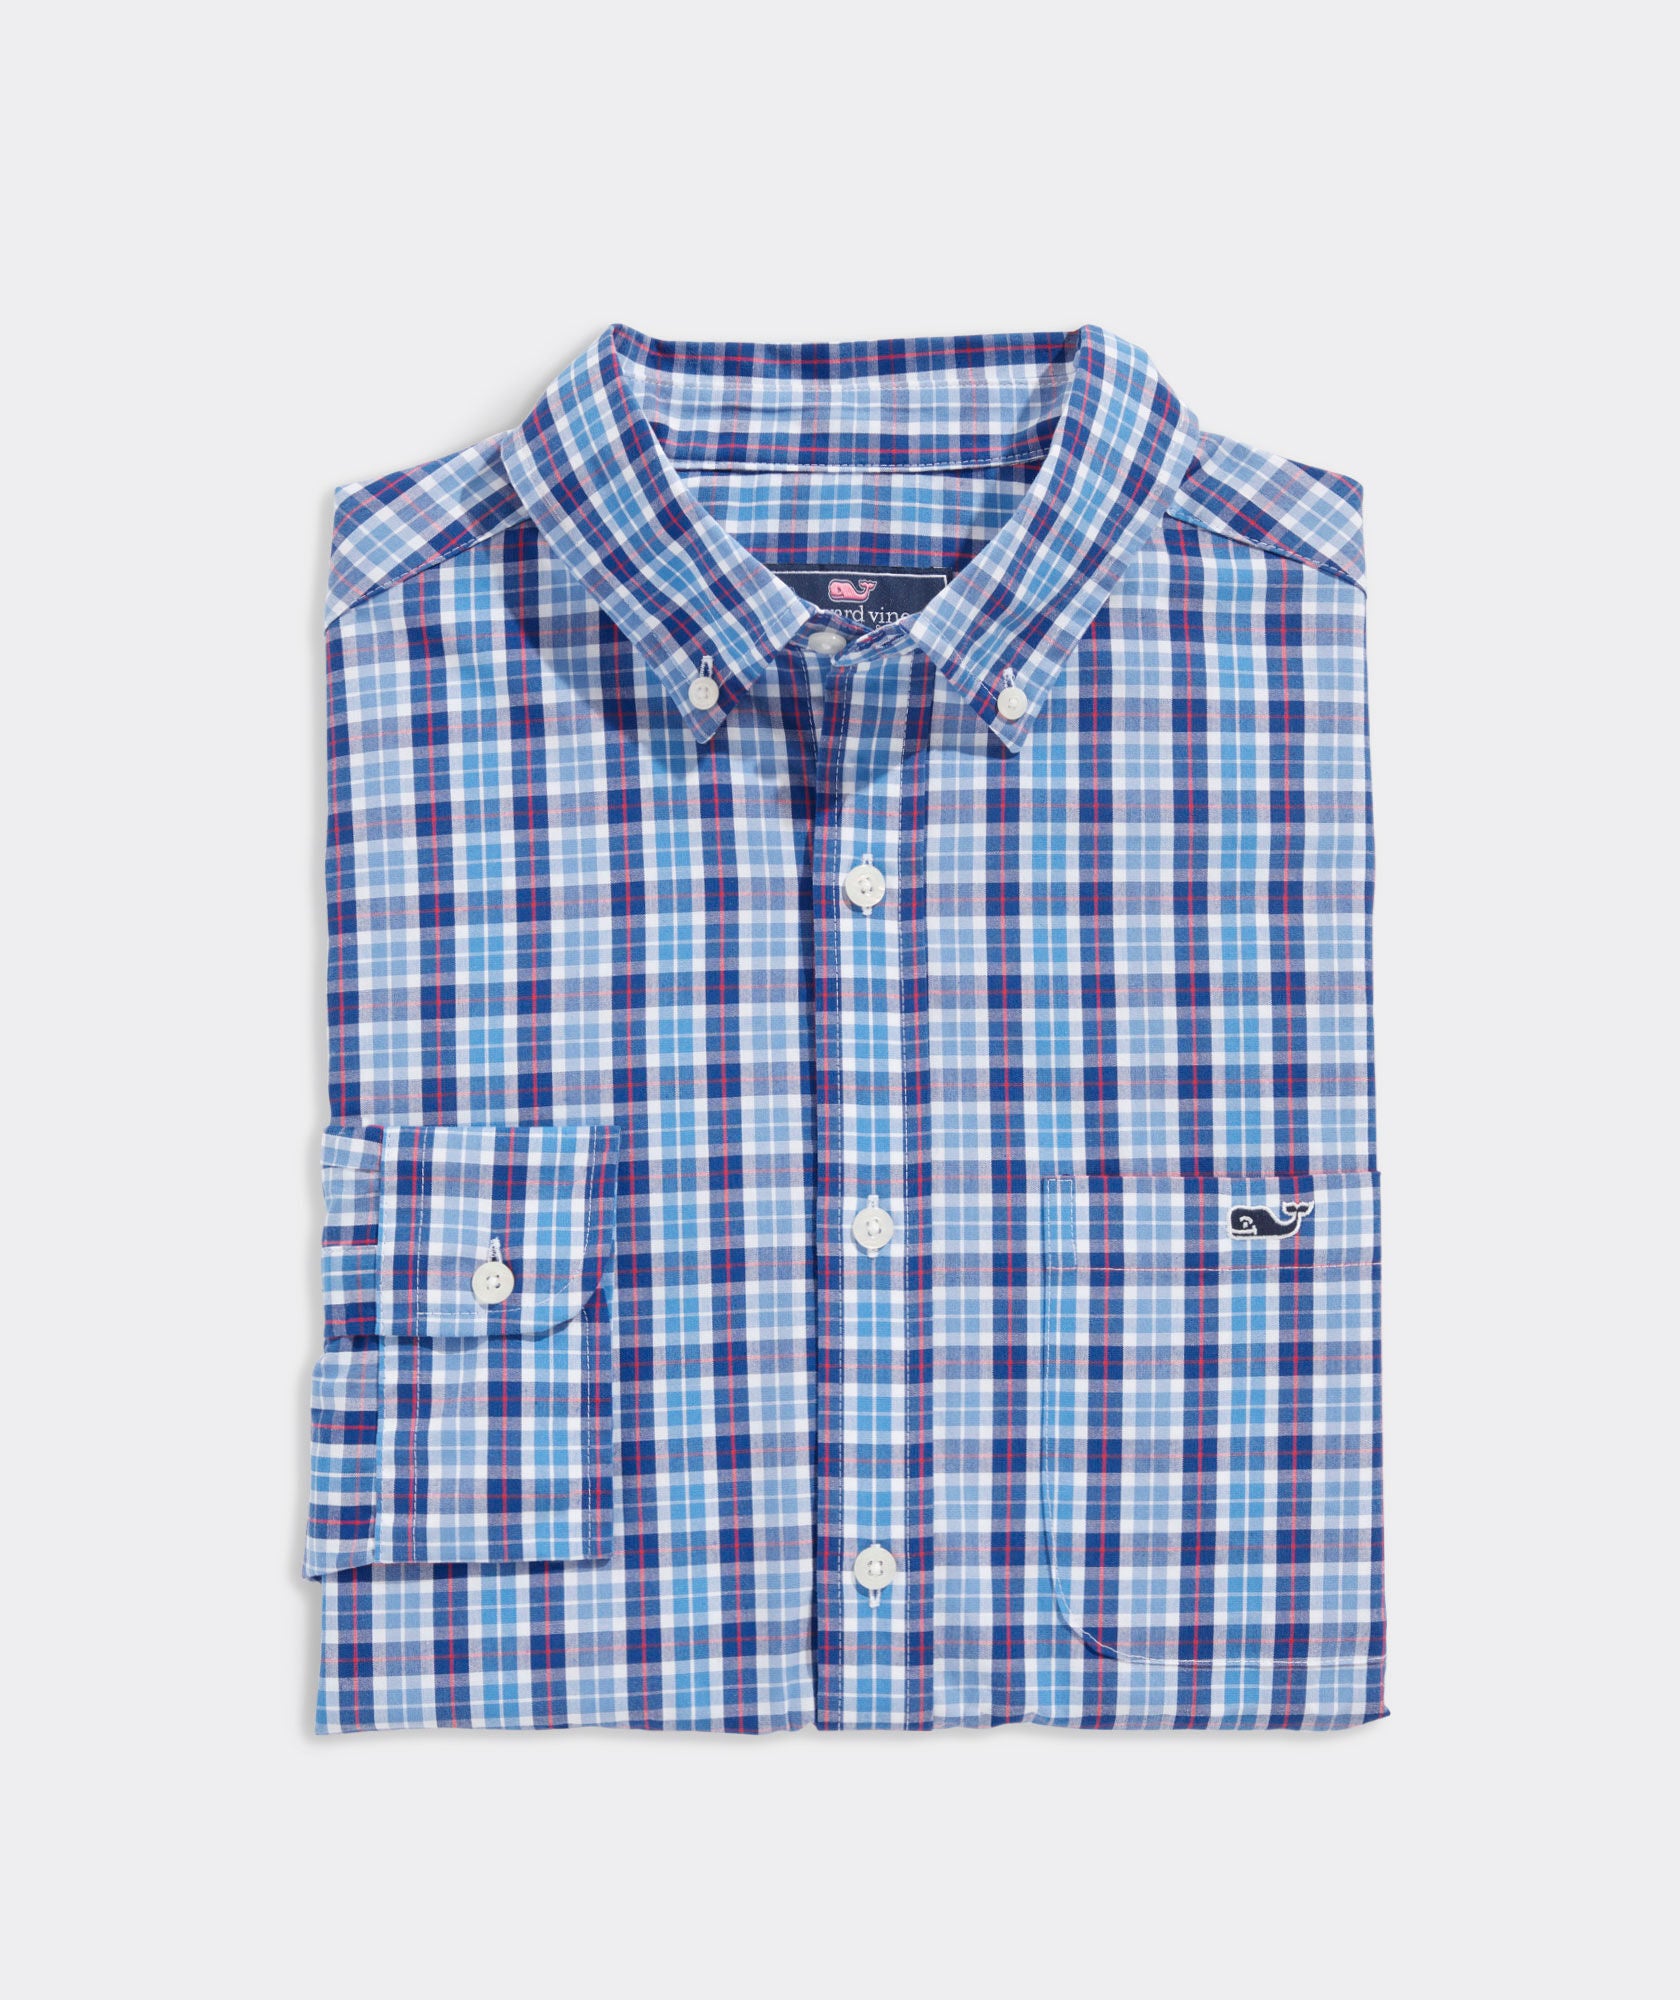 Vineyard Vines Men's Stretch Poplin Check Shirt - Newport Blue